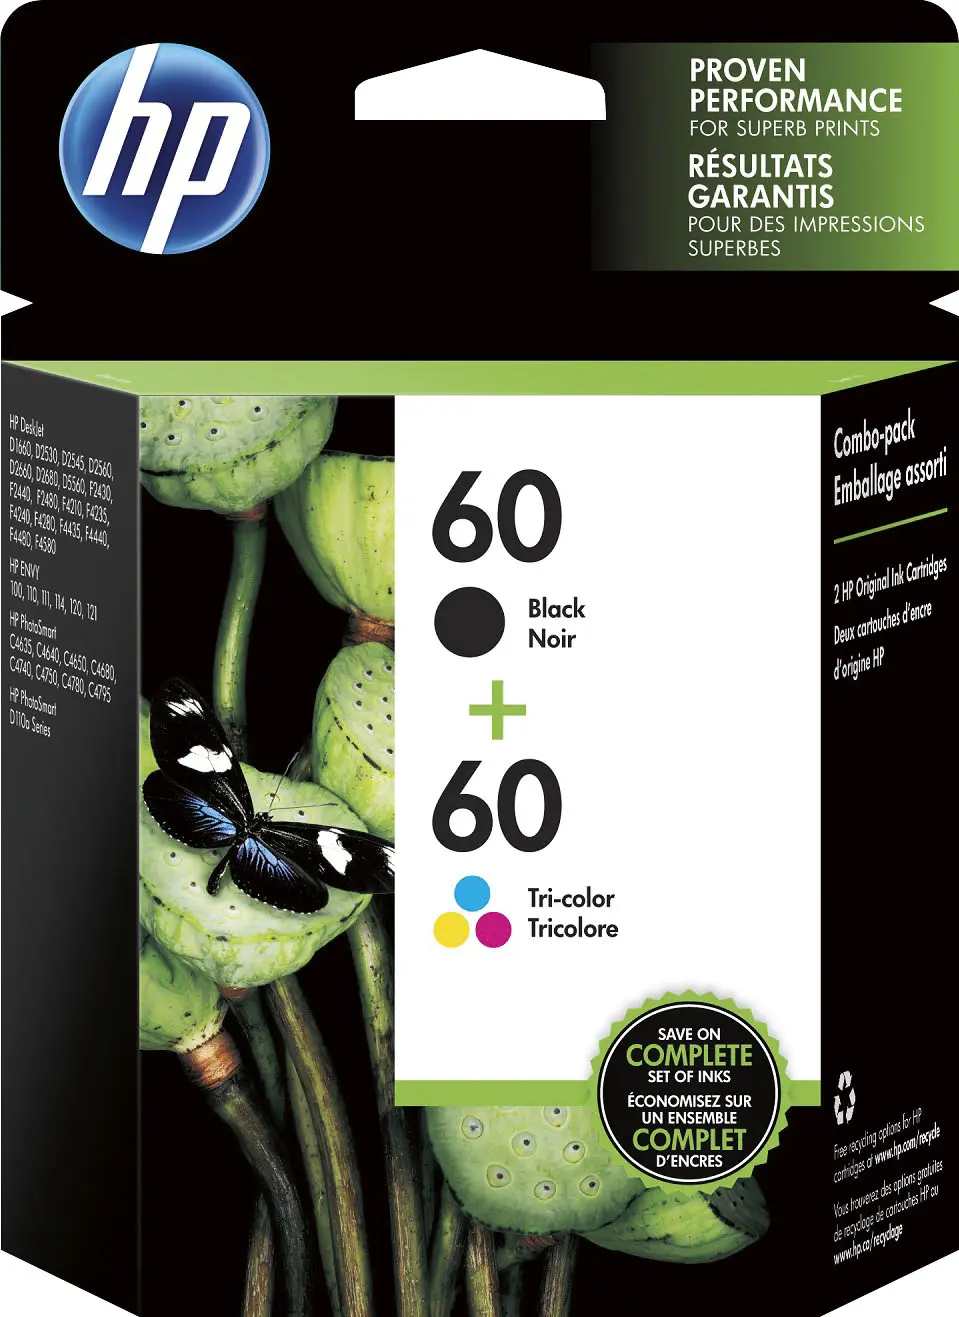 hewlett packard printer ink 60 - Is HP 60 the same as HP 901